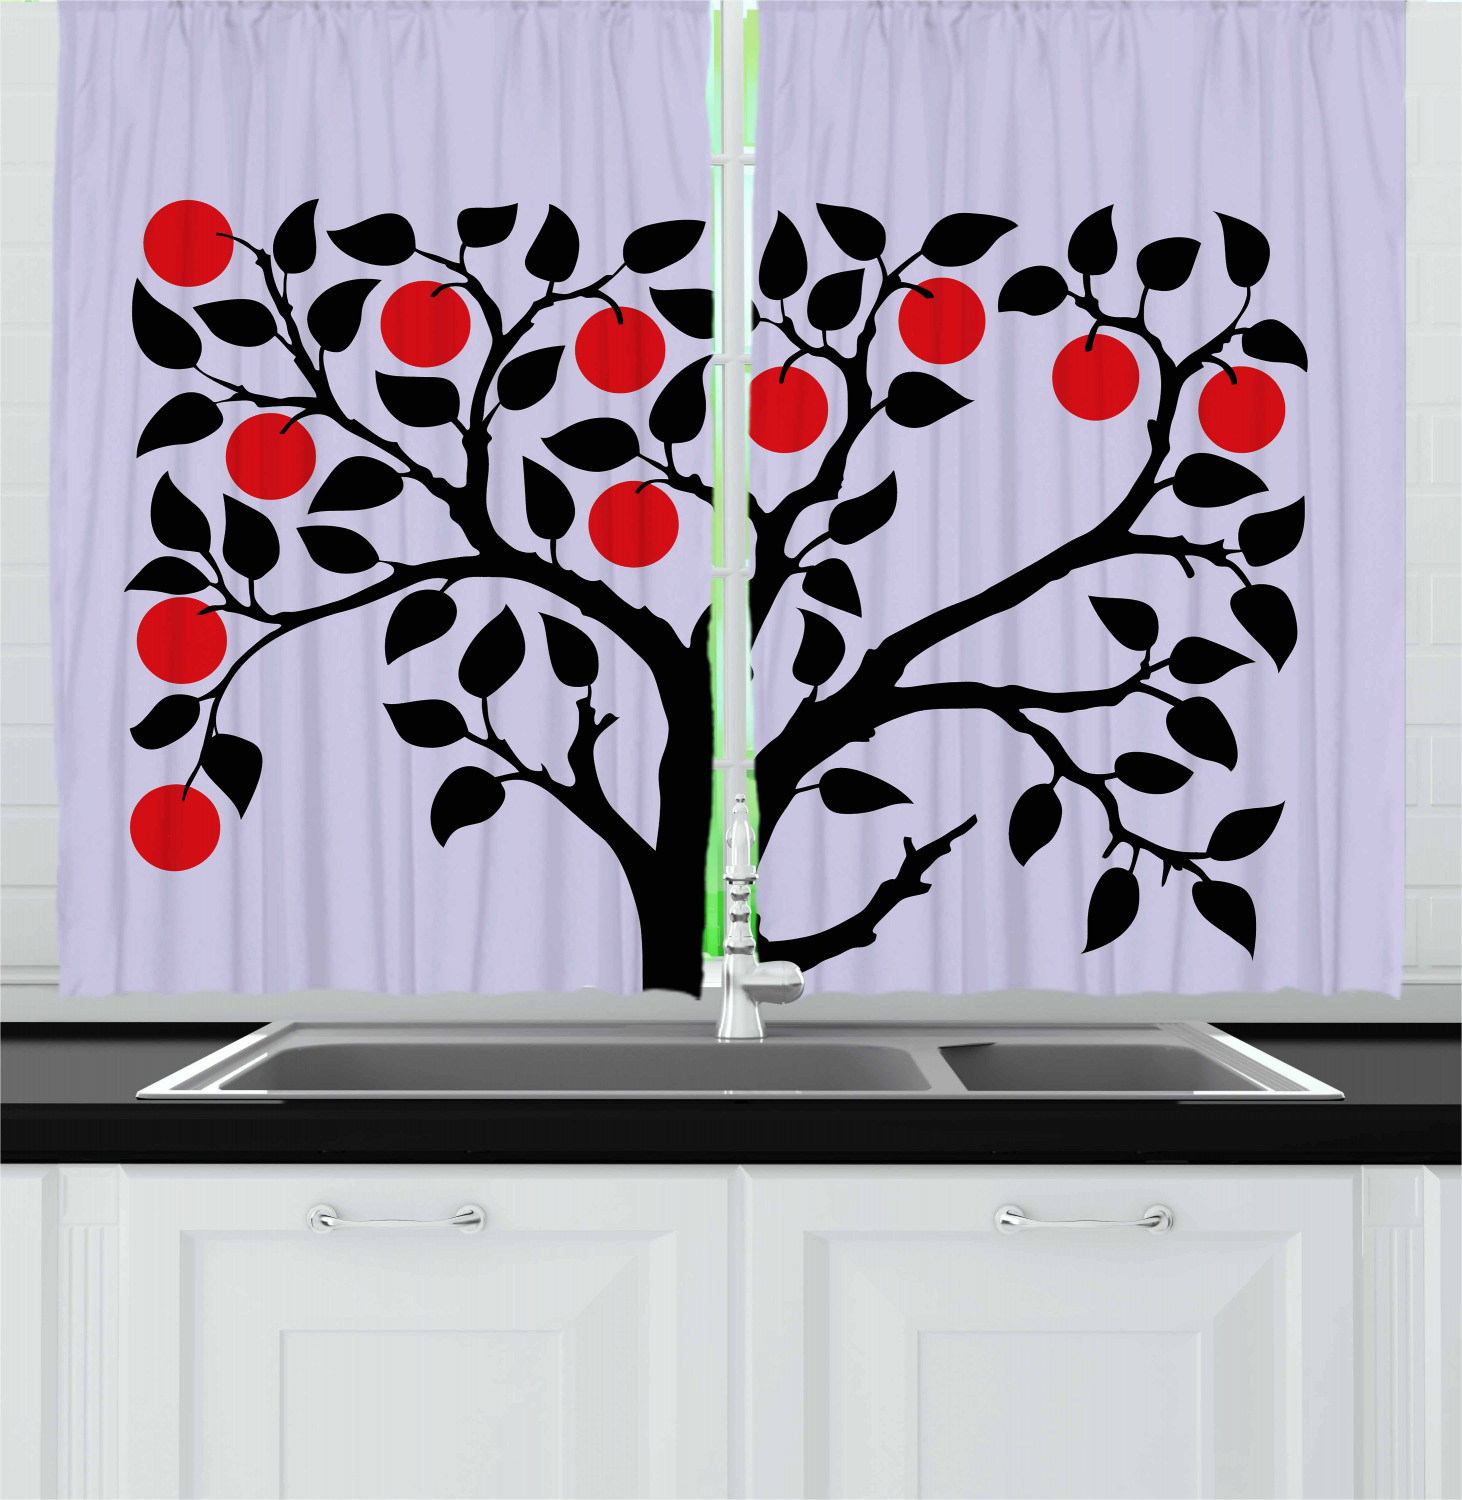 Fruit Kitchen Curtains
 Apple Fruit Kitchen Curtains 2 Panel Set Window Drapes 55